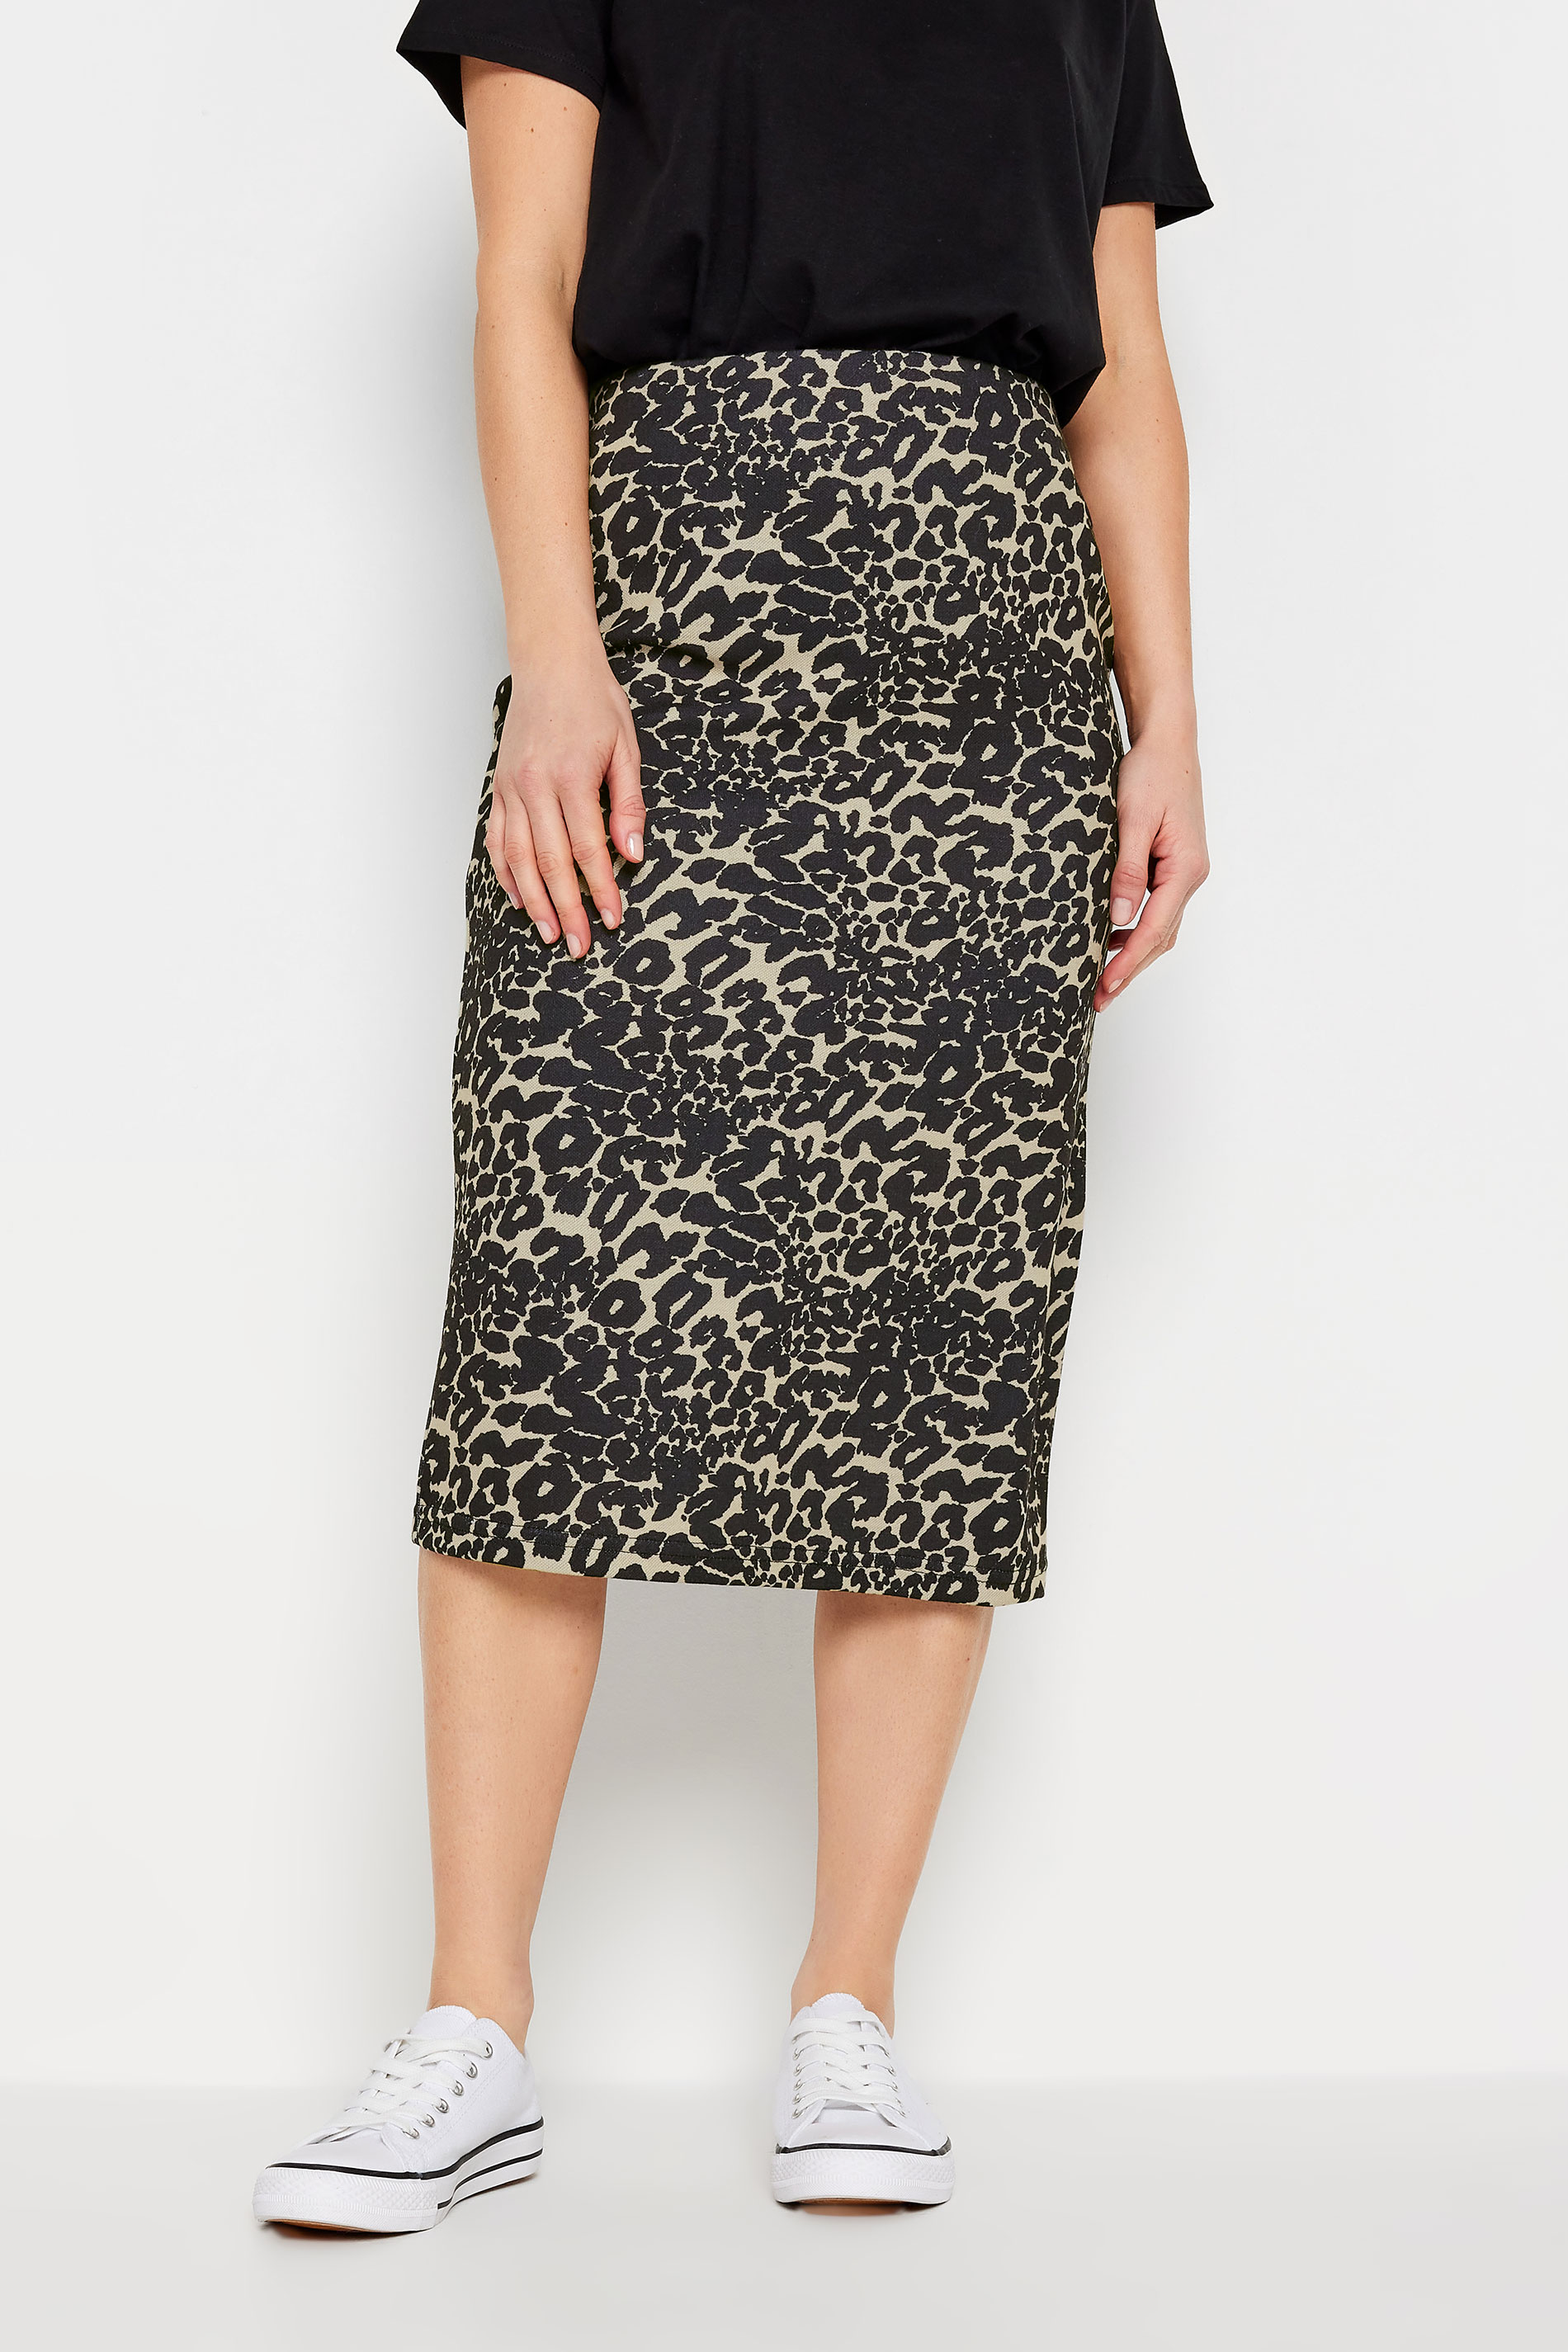 M&Co Petite Natural Brown Leopard Print Ponte Midi Skirt | M&Co 2